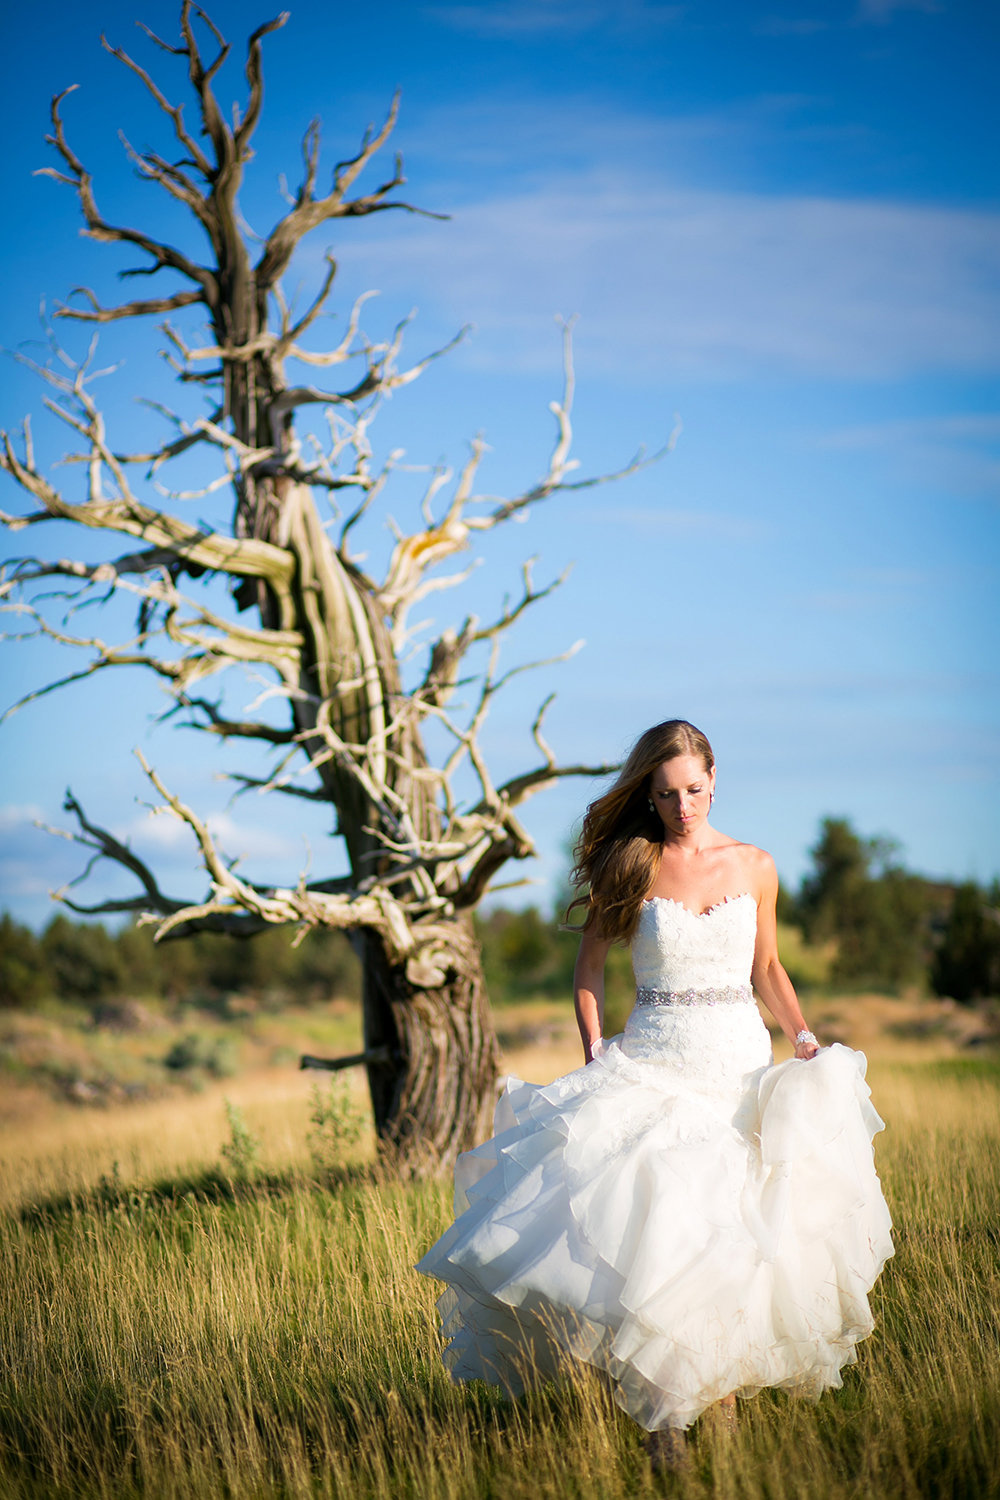 Destination wedding photos open field outdoors bride rustic